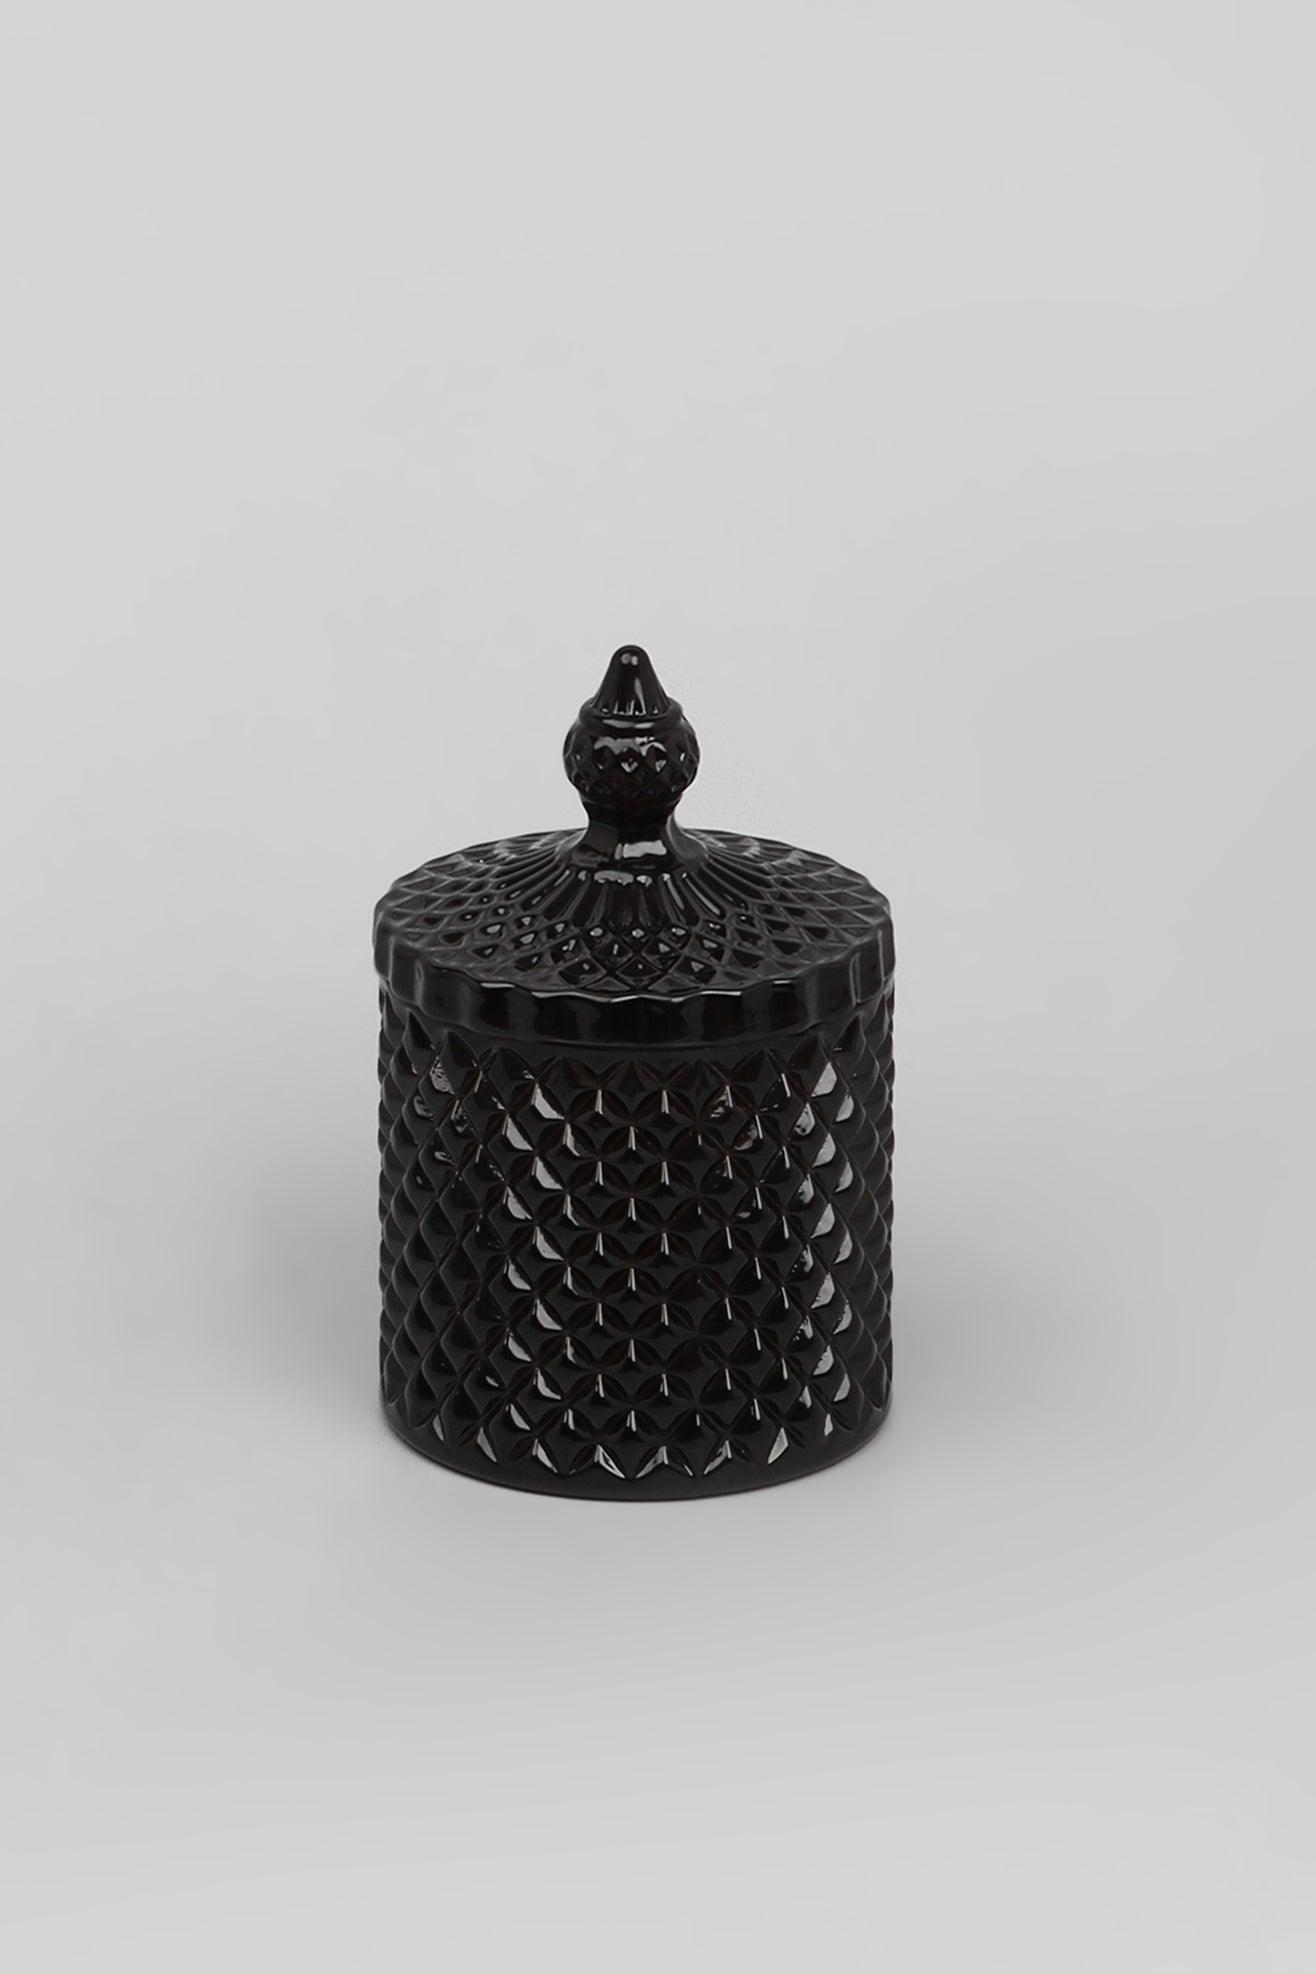 G Decor Candles Black Misumi Scented Sandalwood Perfect for Meditation, Black Diamond Glass Jar Candle